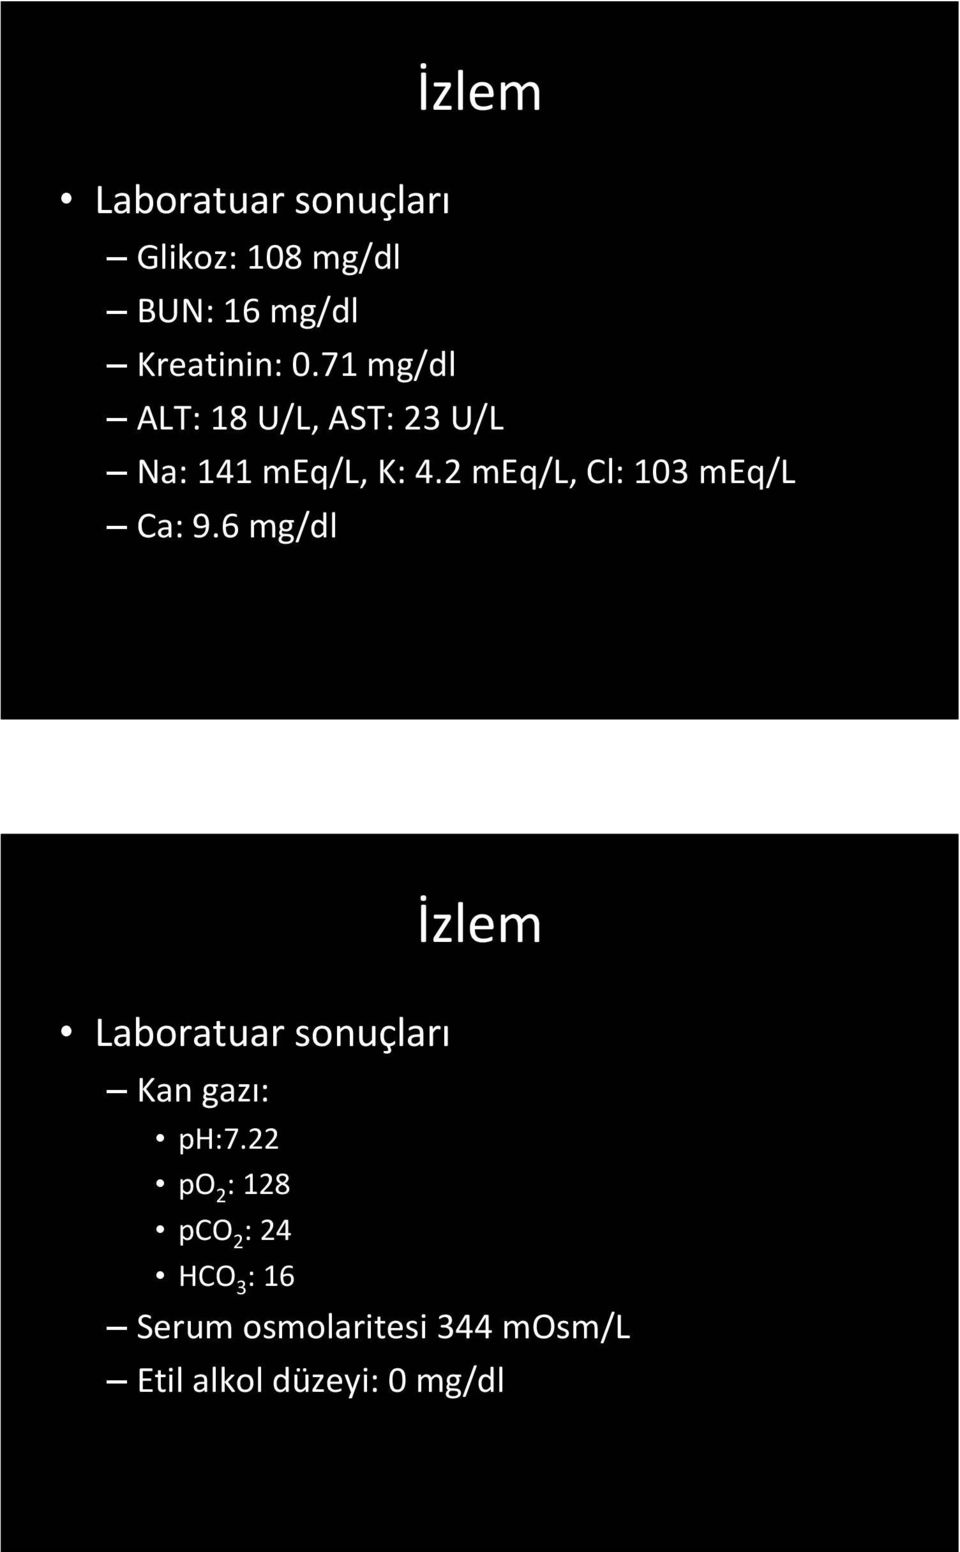 2 meq/l, Cl: 103 meq/l Ca: 9.6 mg/dl Laboratuar sonuçları Kan gazı: ph:7.